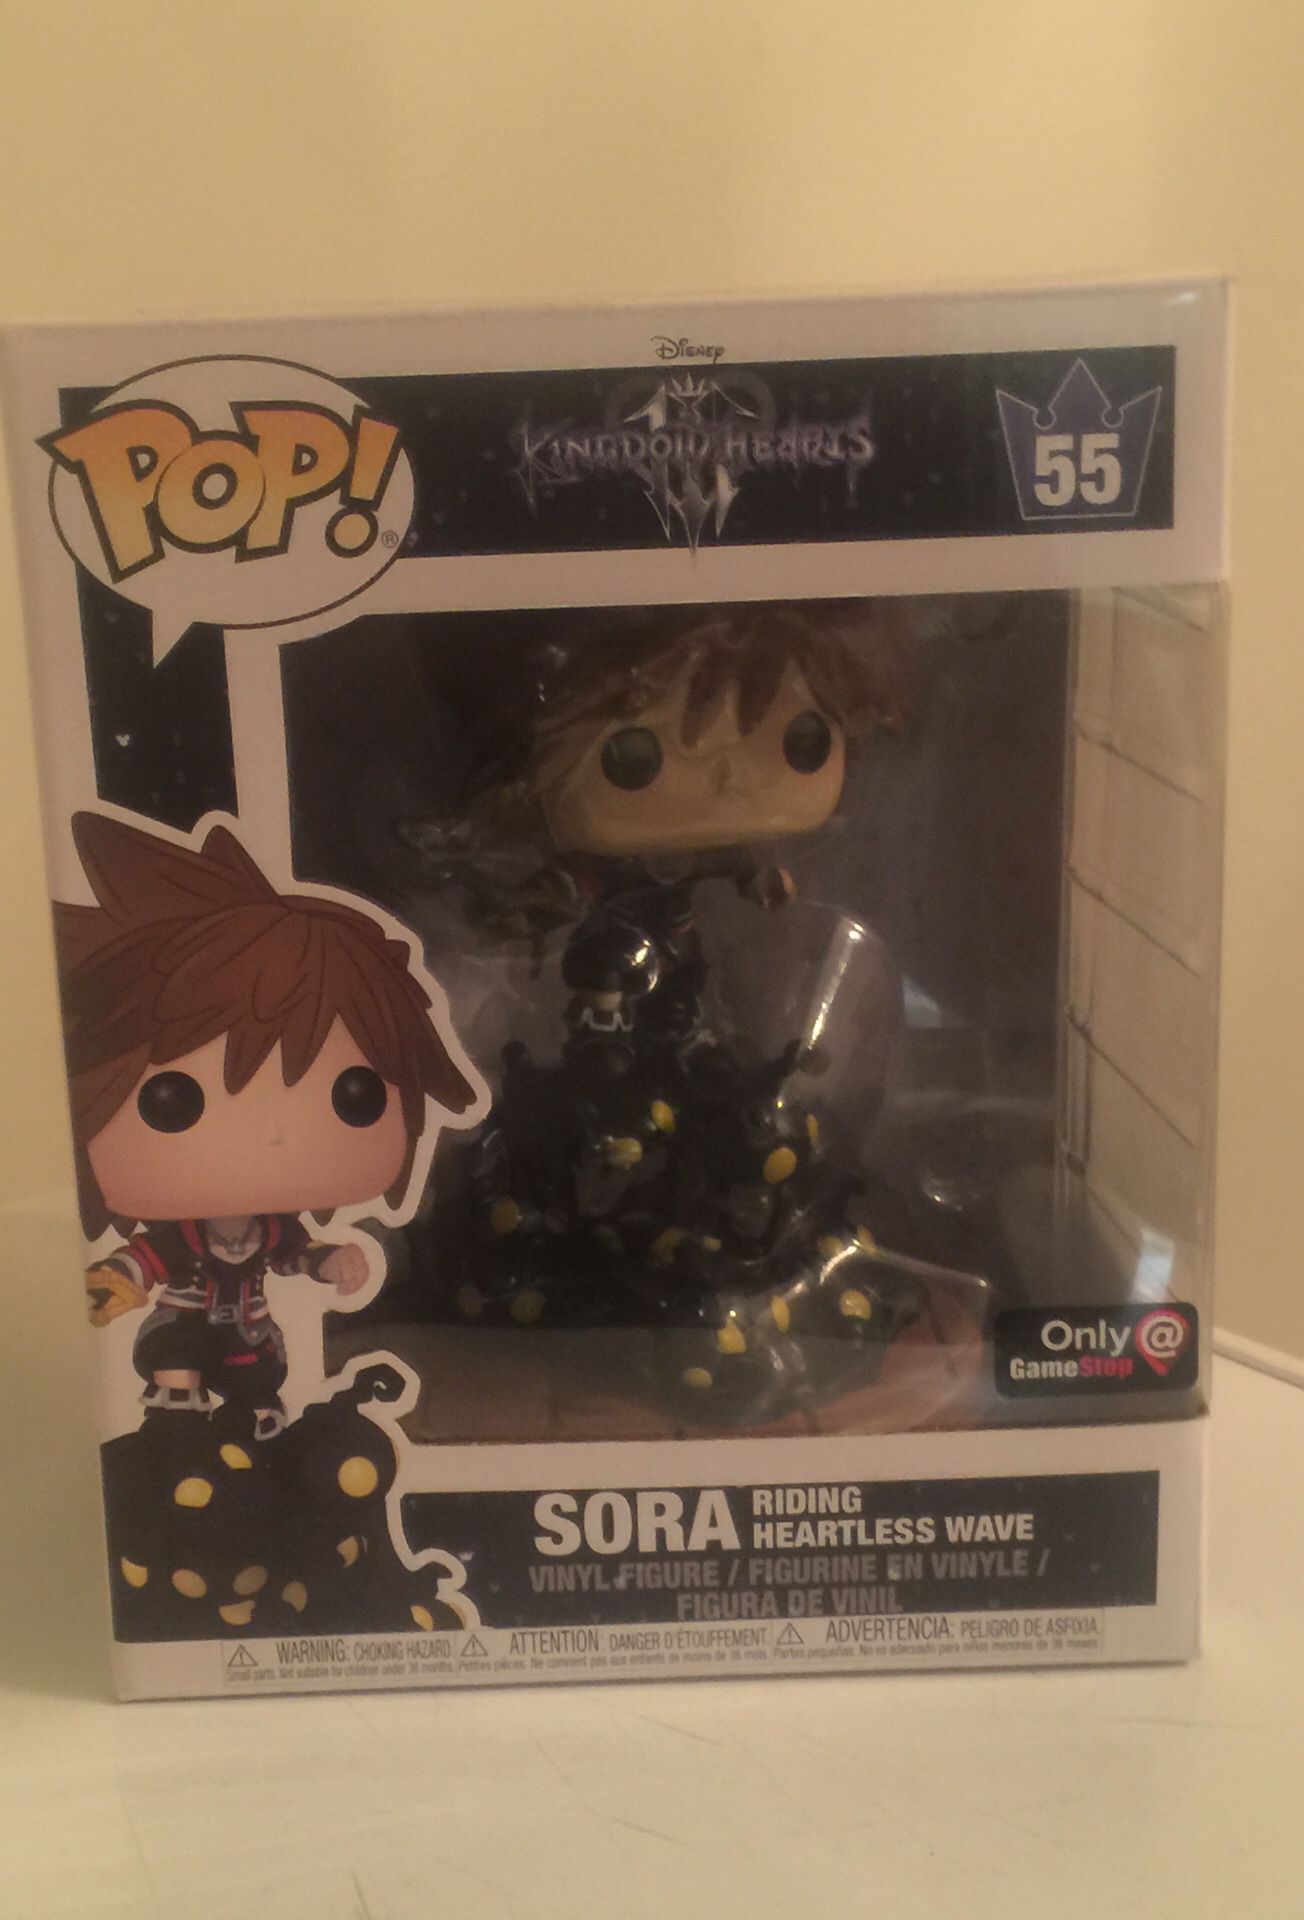 Funko Pop Kingdom Hearts 3 GameStop Mystery Box Sora Riding Heartless Wave